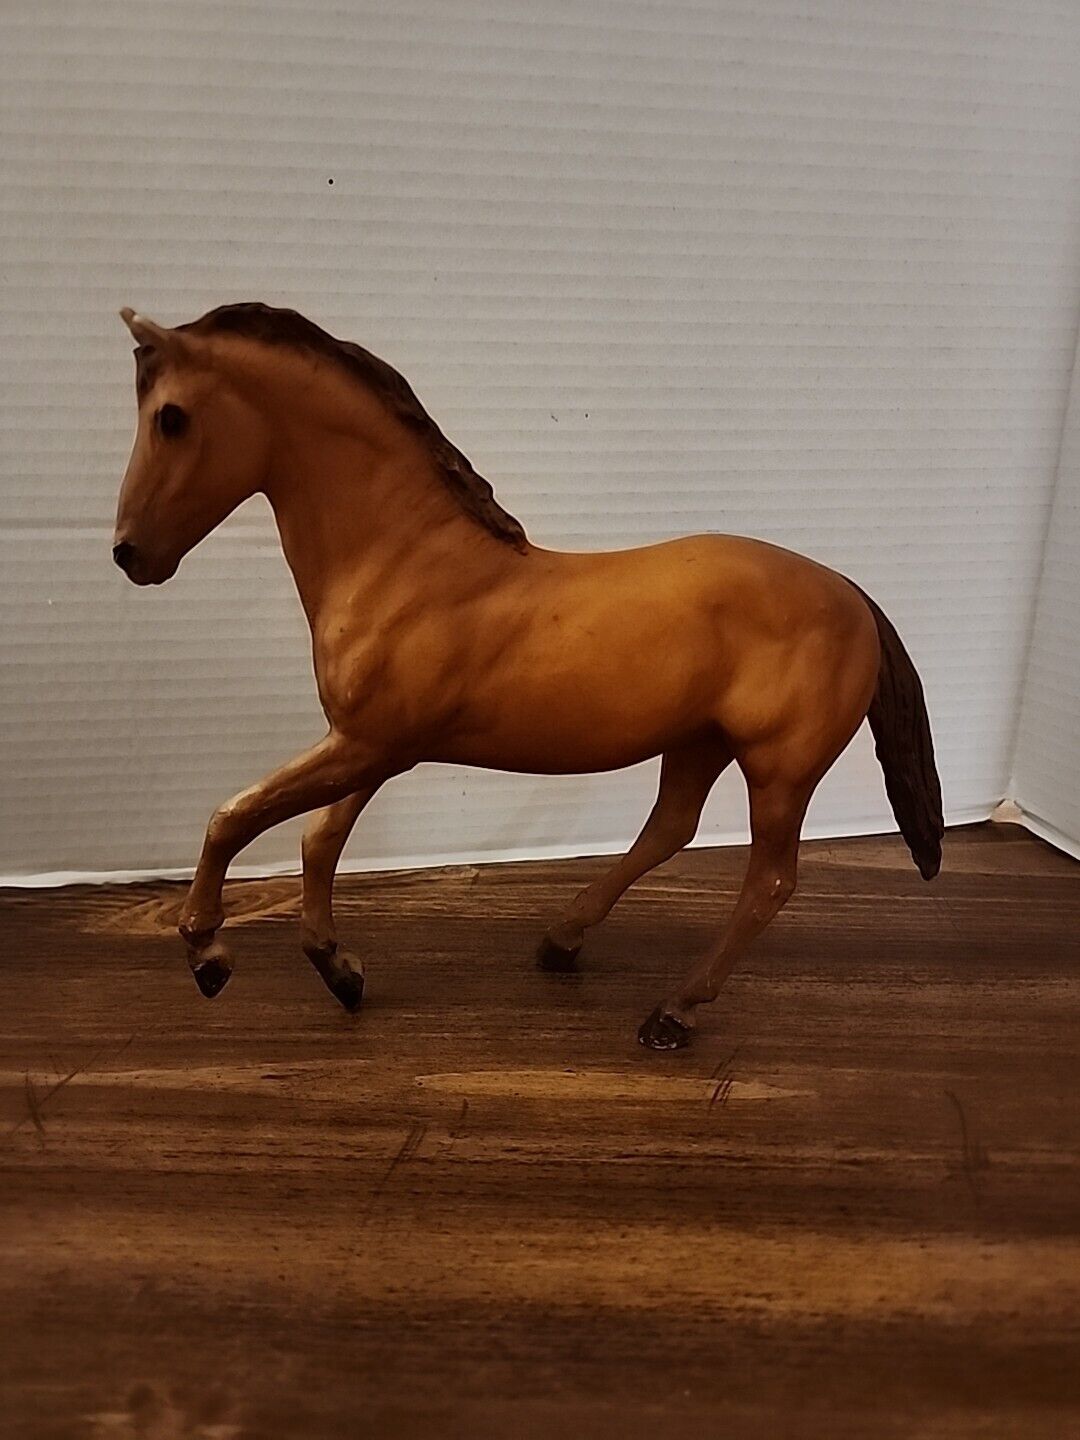 Breyer Horse Classic Vintage Mare 6.5